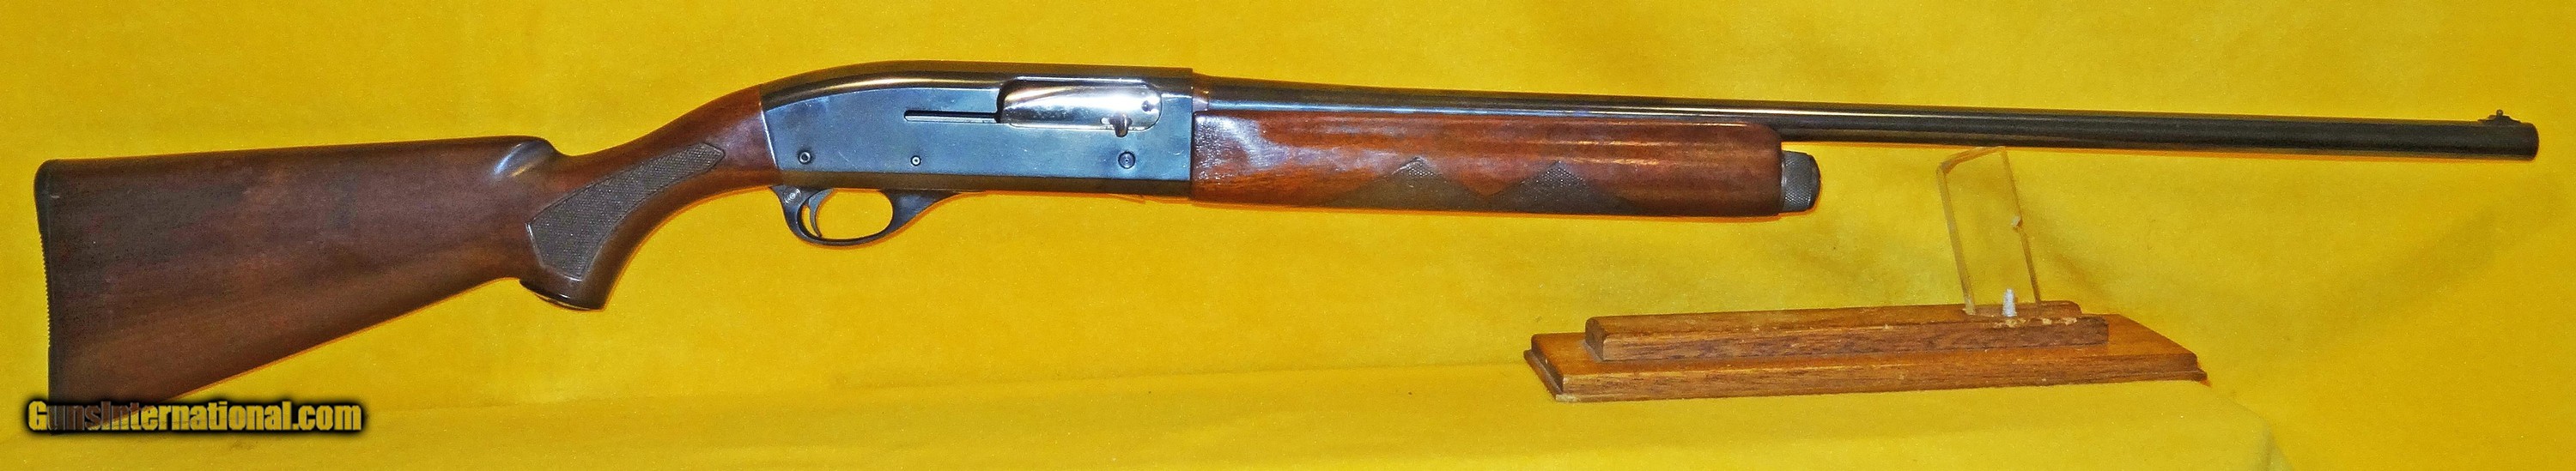 remington 12 gauge model 1148 serial number